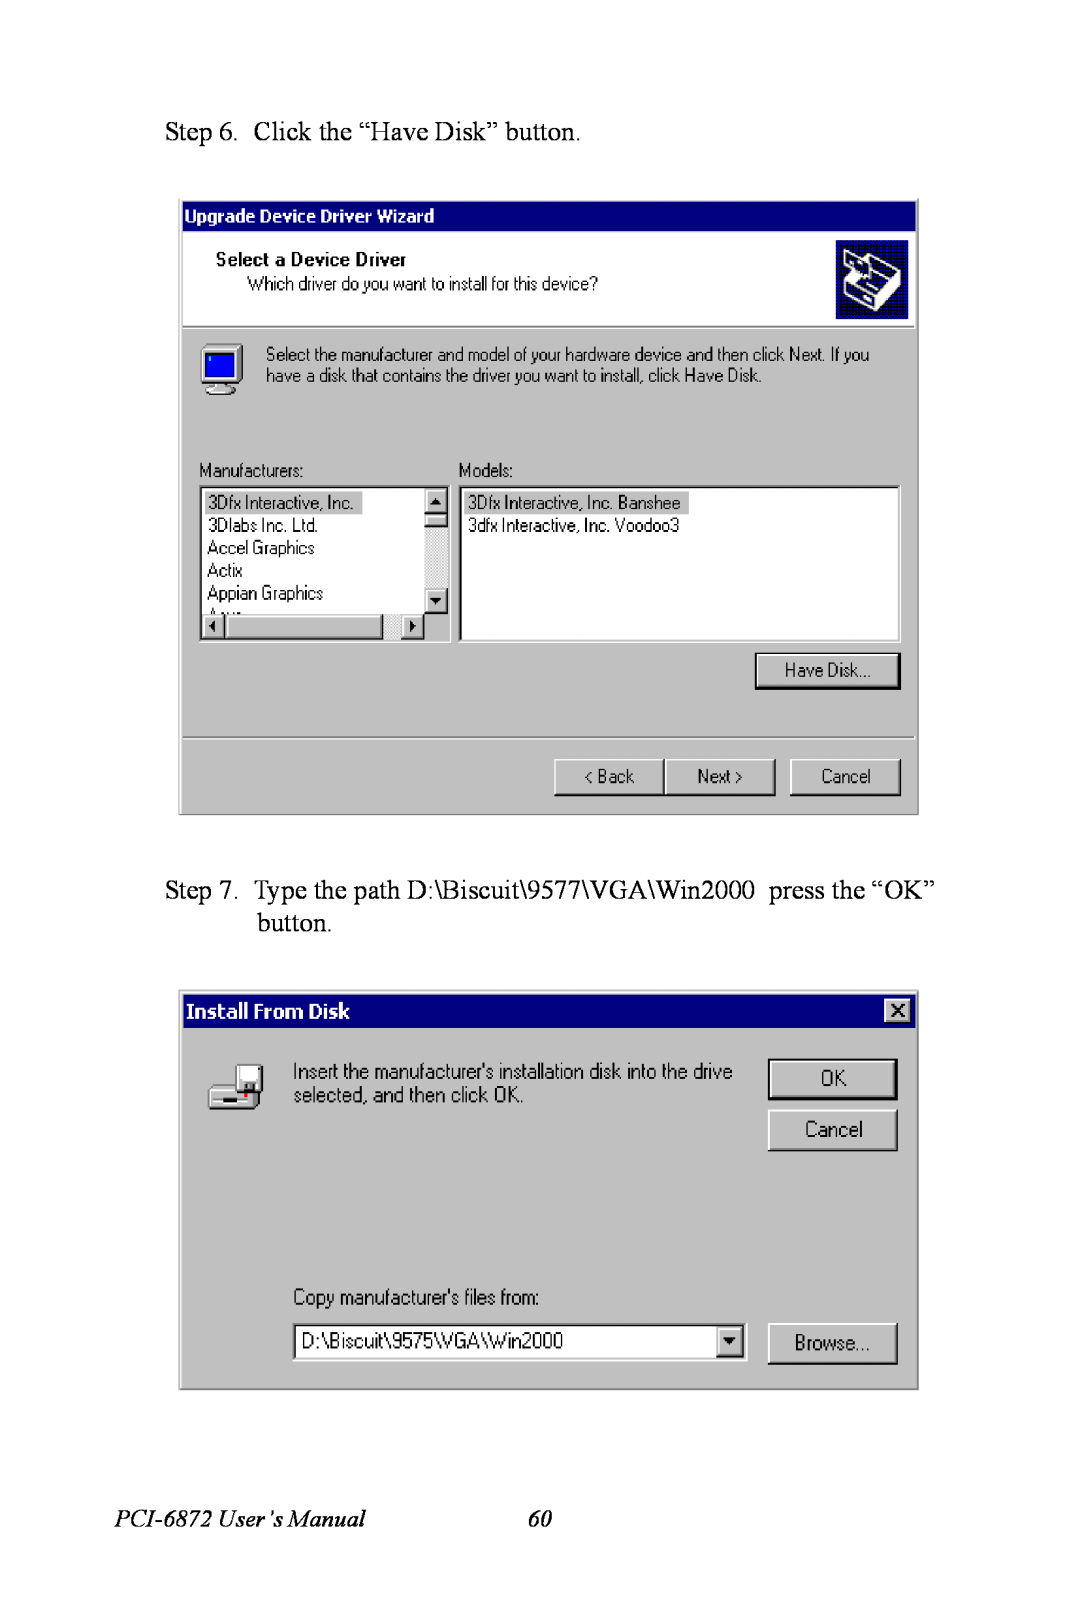 Advantech user manual Click the “Have Disk” button, PCI-6872 User’s Manual 